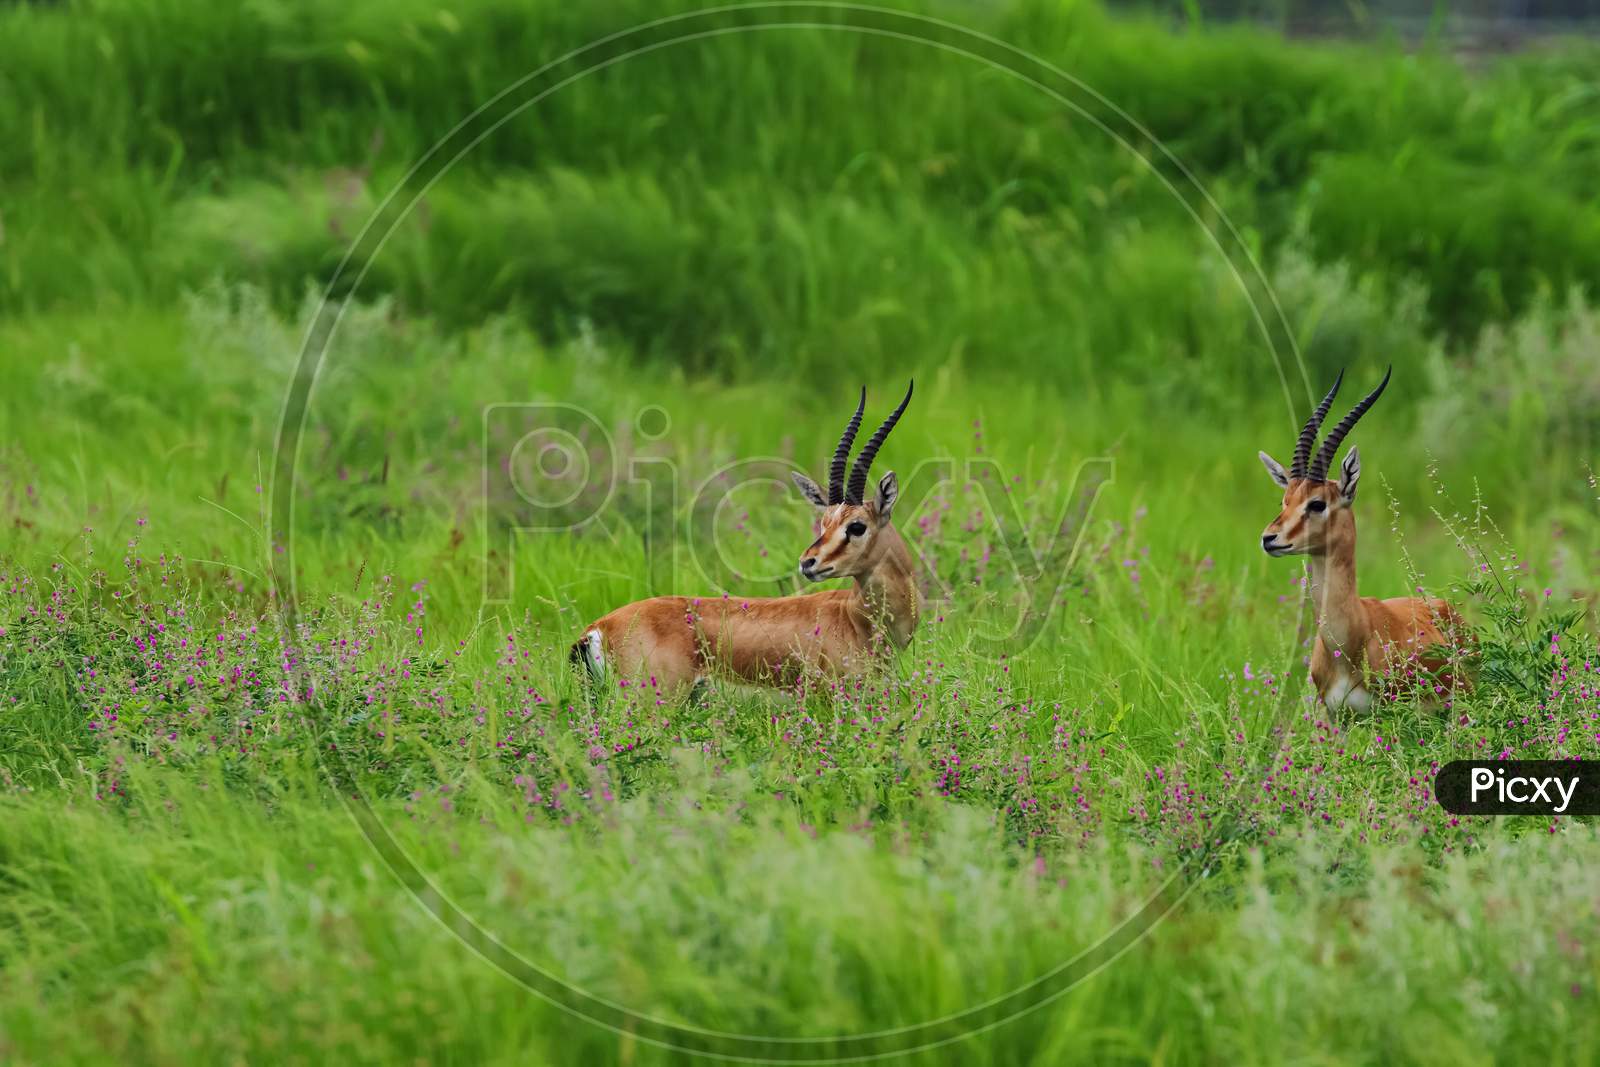 A pair of an Indian gazelle antelope also called Chinkara